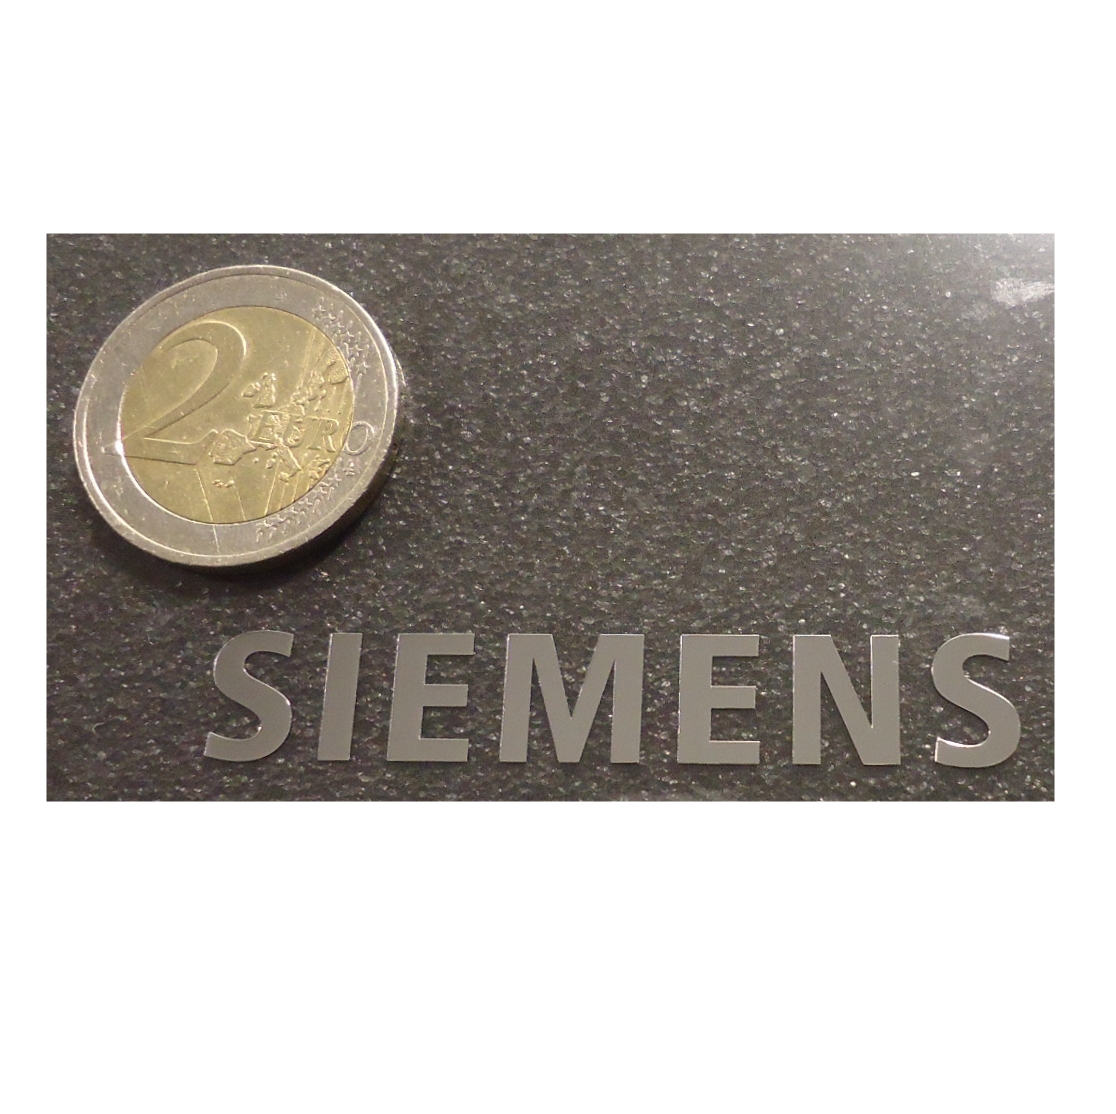 SIEMENS LOGO Nálepka Metal Edition 60 x 10 mm